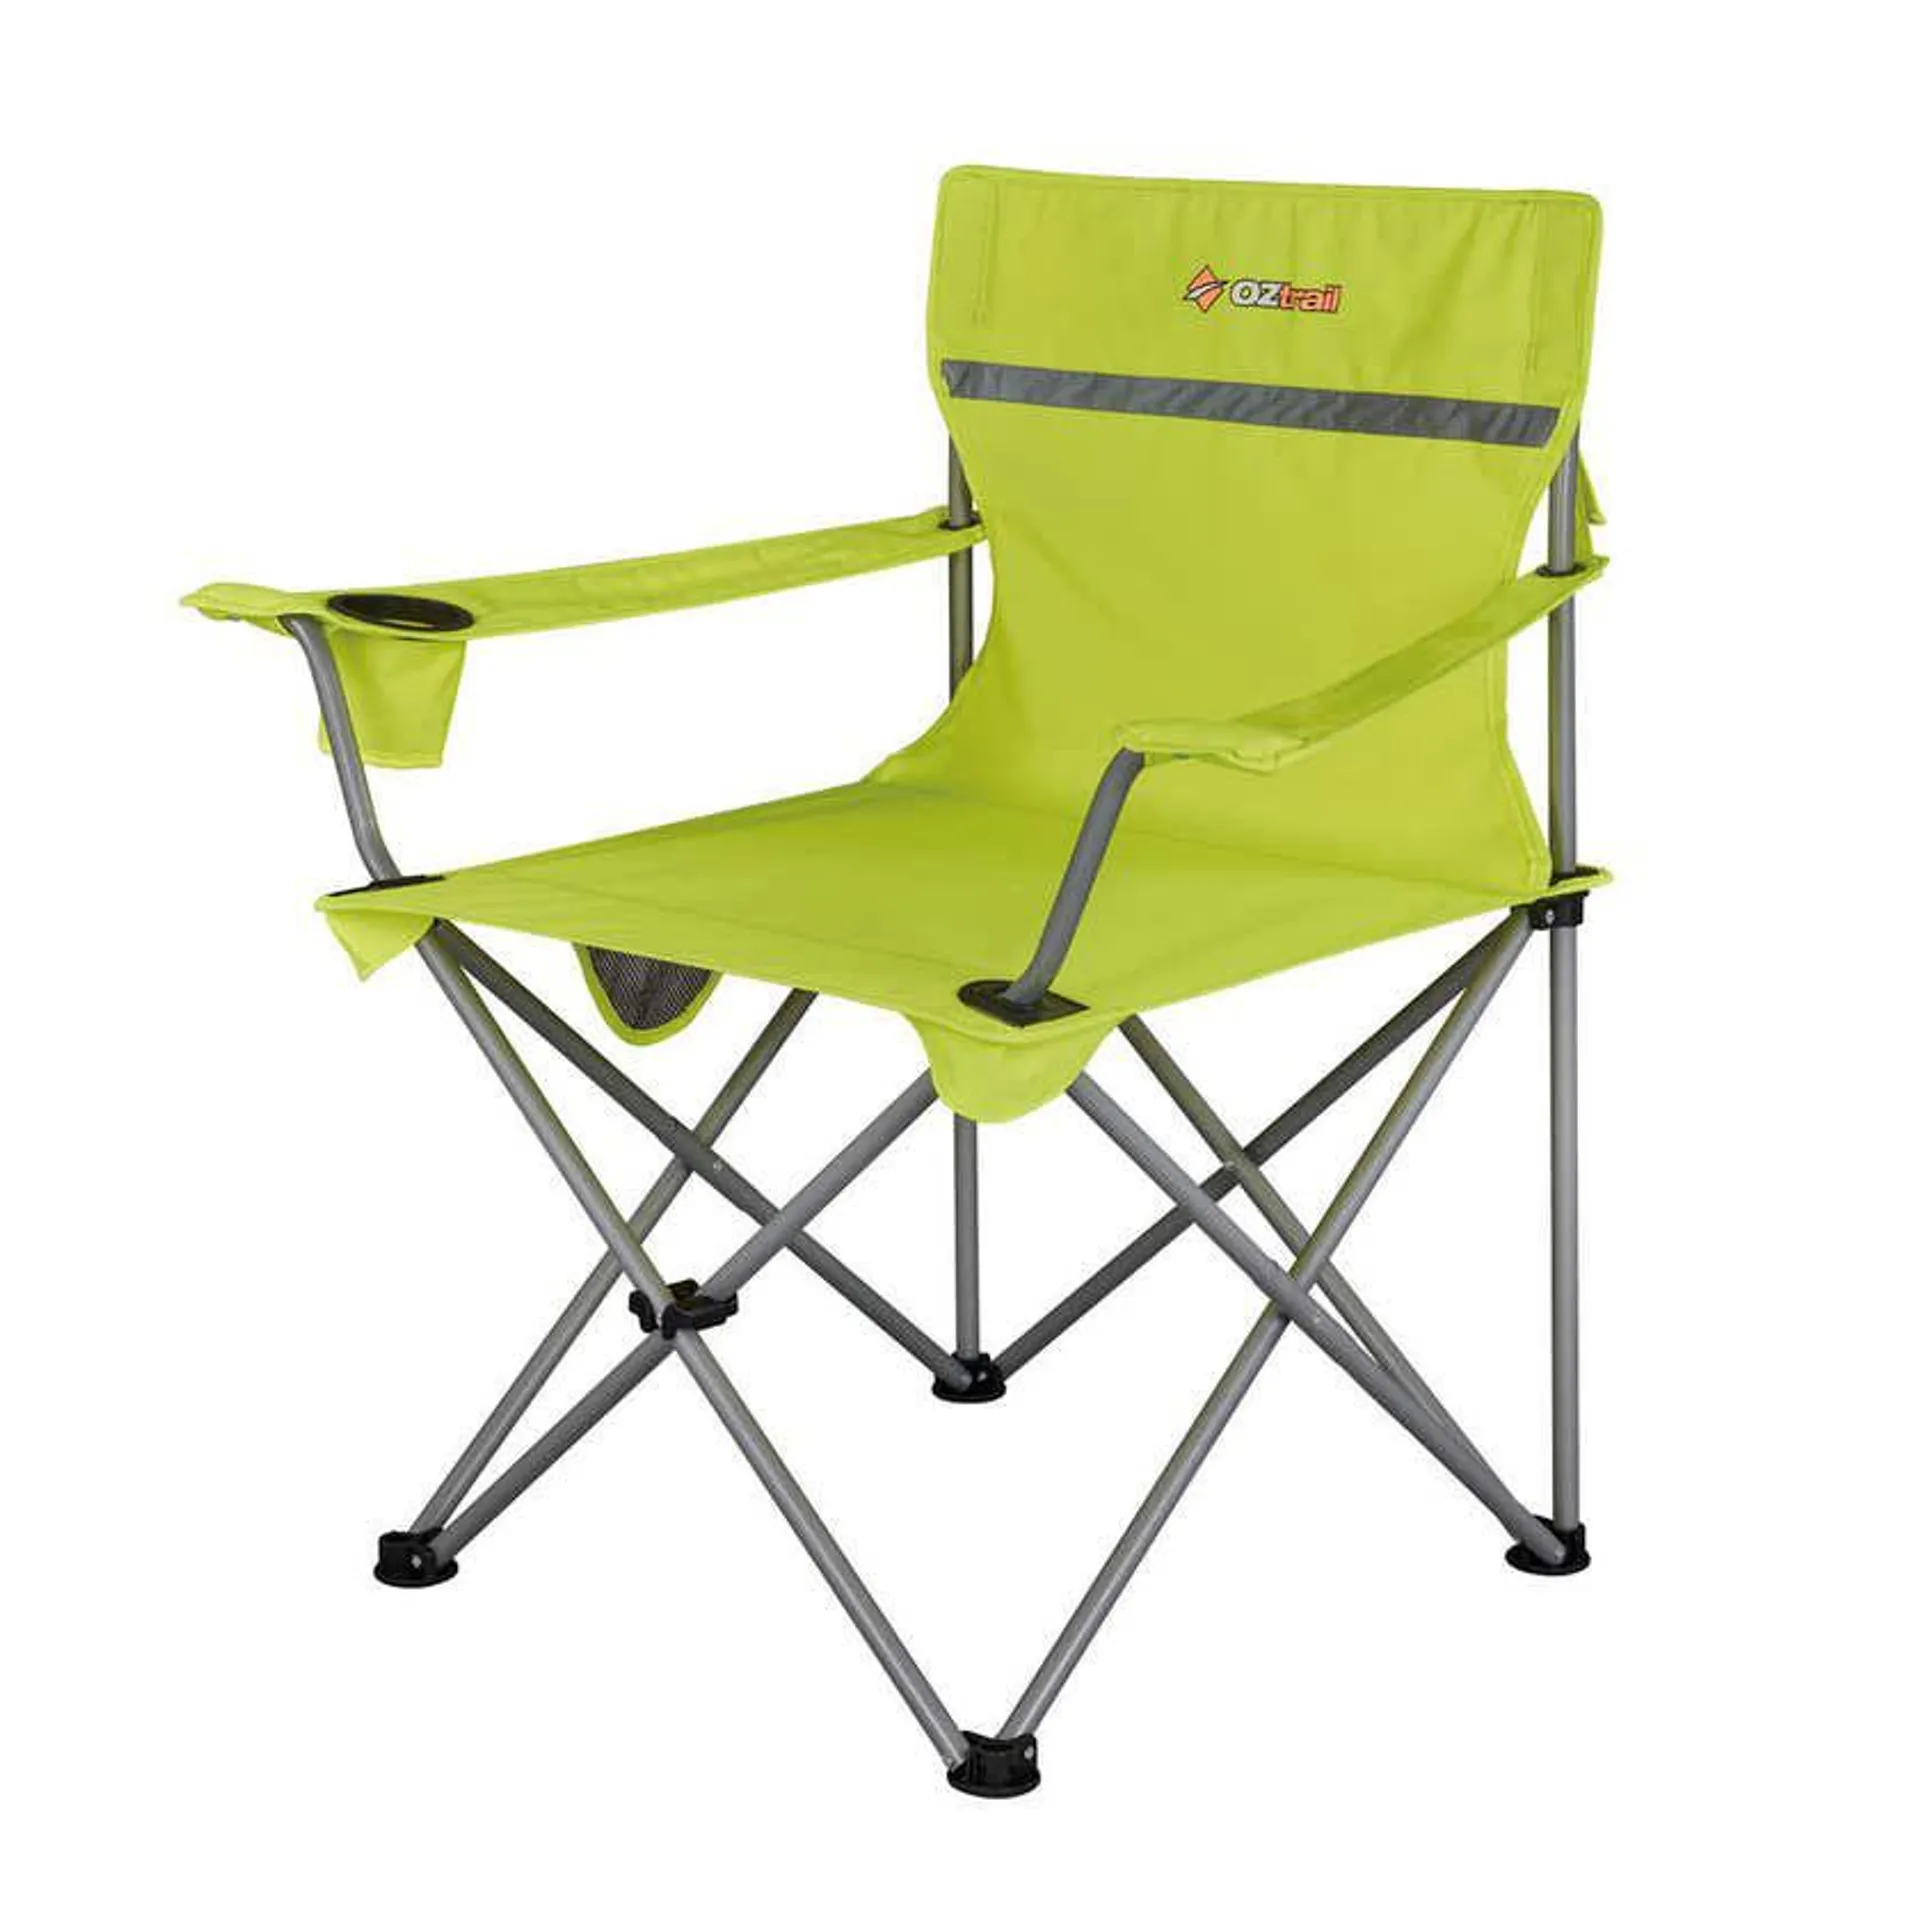 Oztrail Jumbo Camp Chair High Visibility Yellow